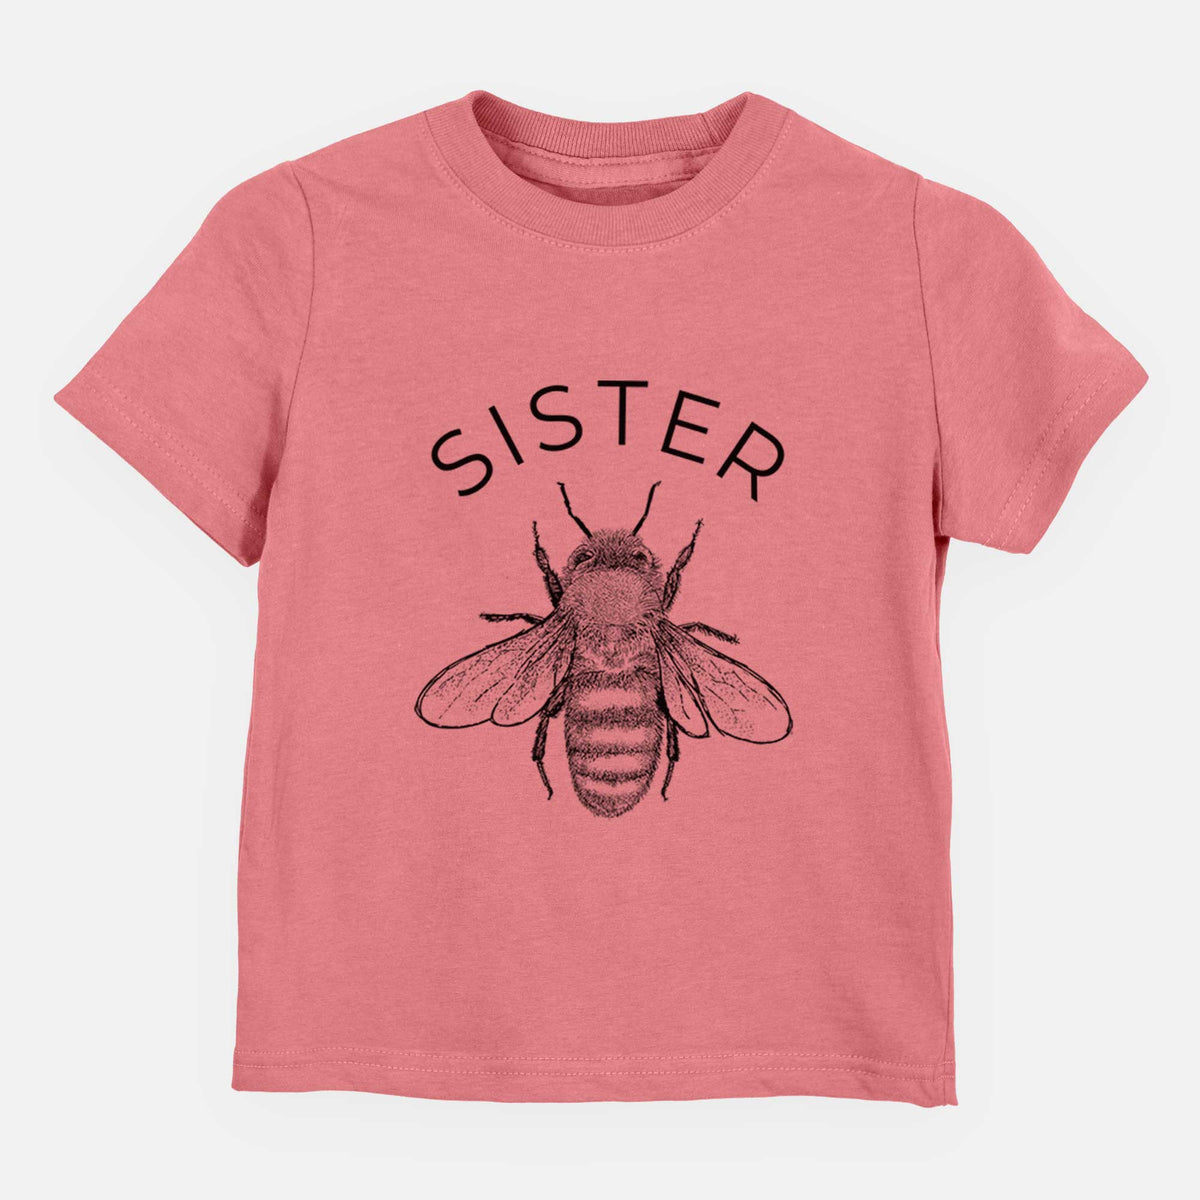 Sister Bee - Kids Shirt